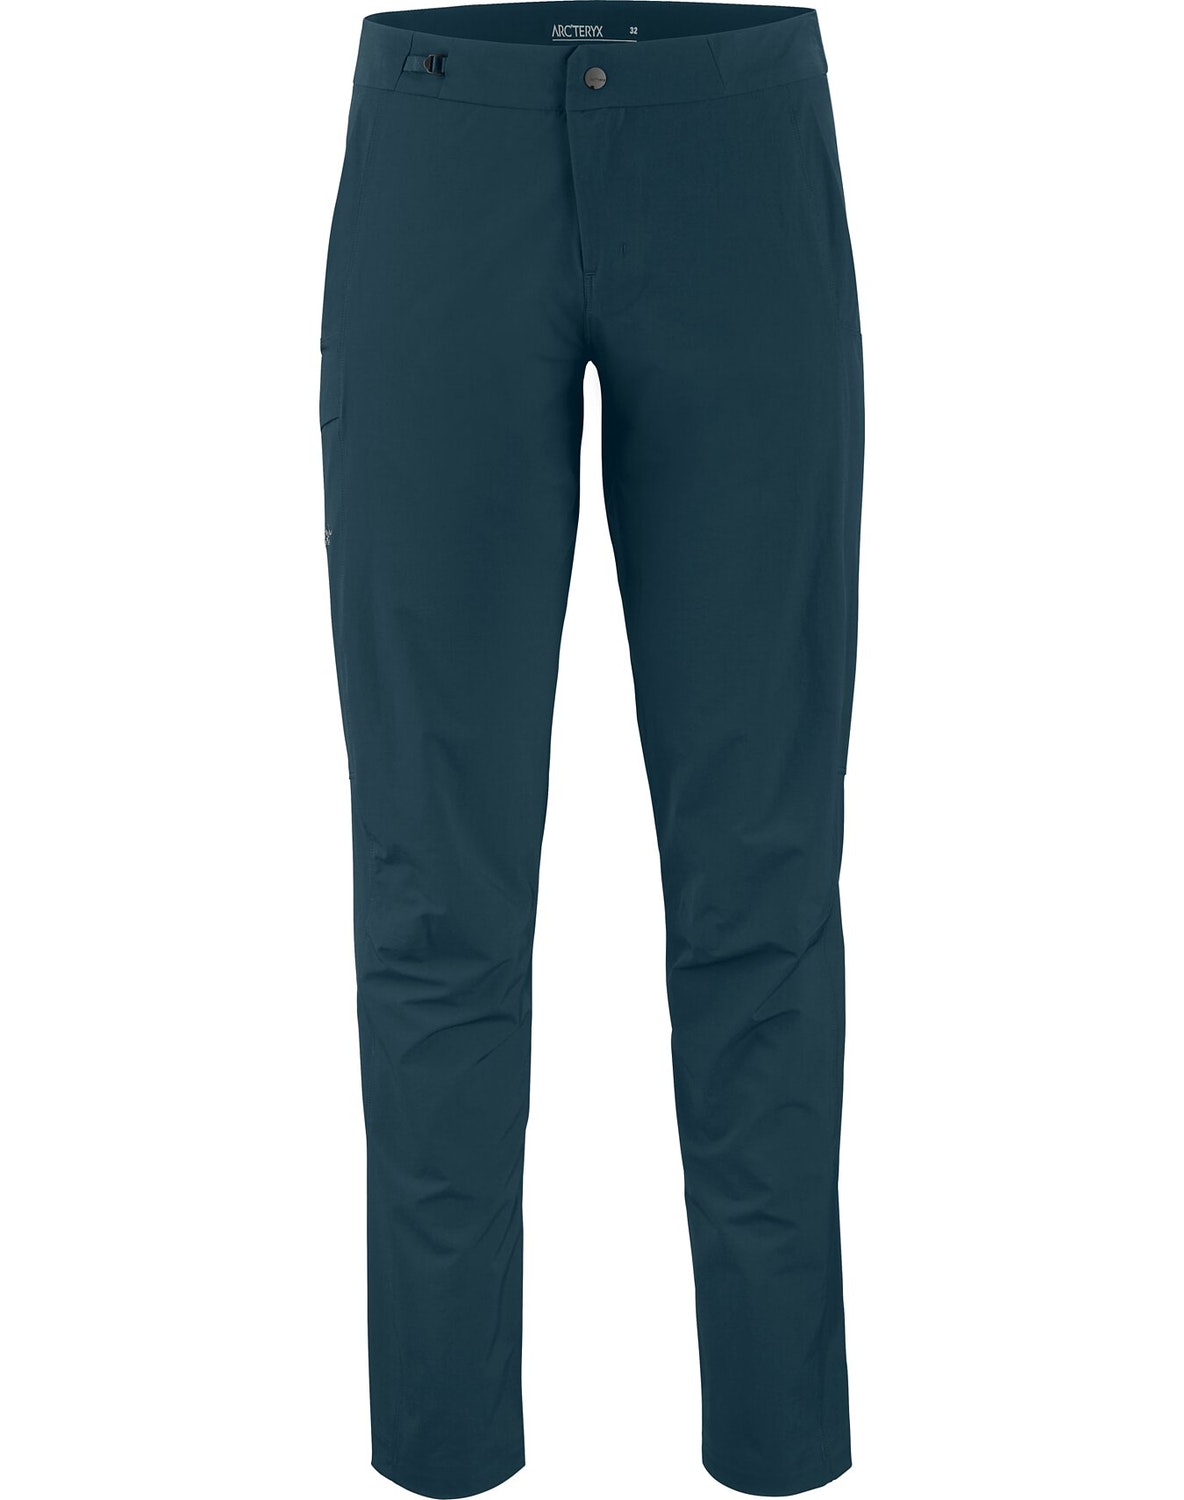 Pantaloni Arc'teryx Gamma SL Uomo Blu - IT-419719